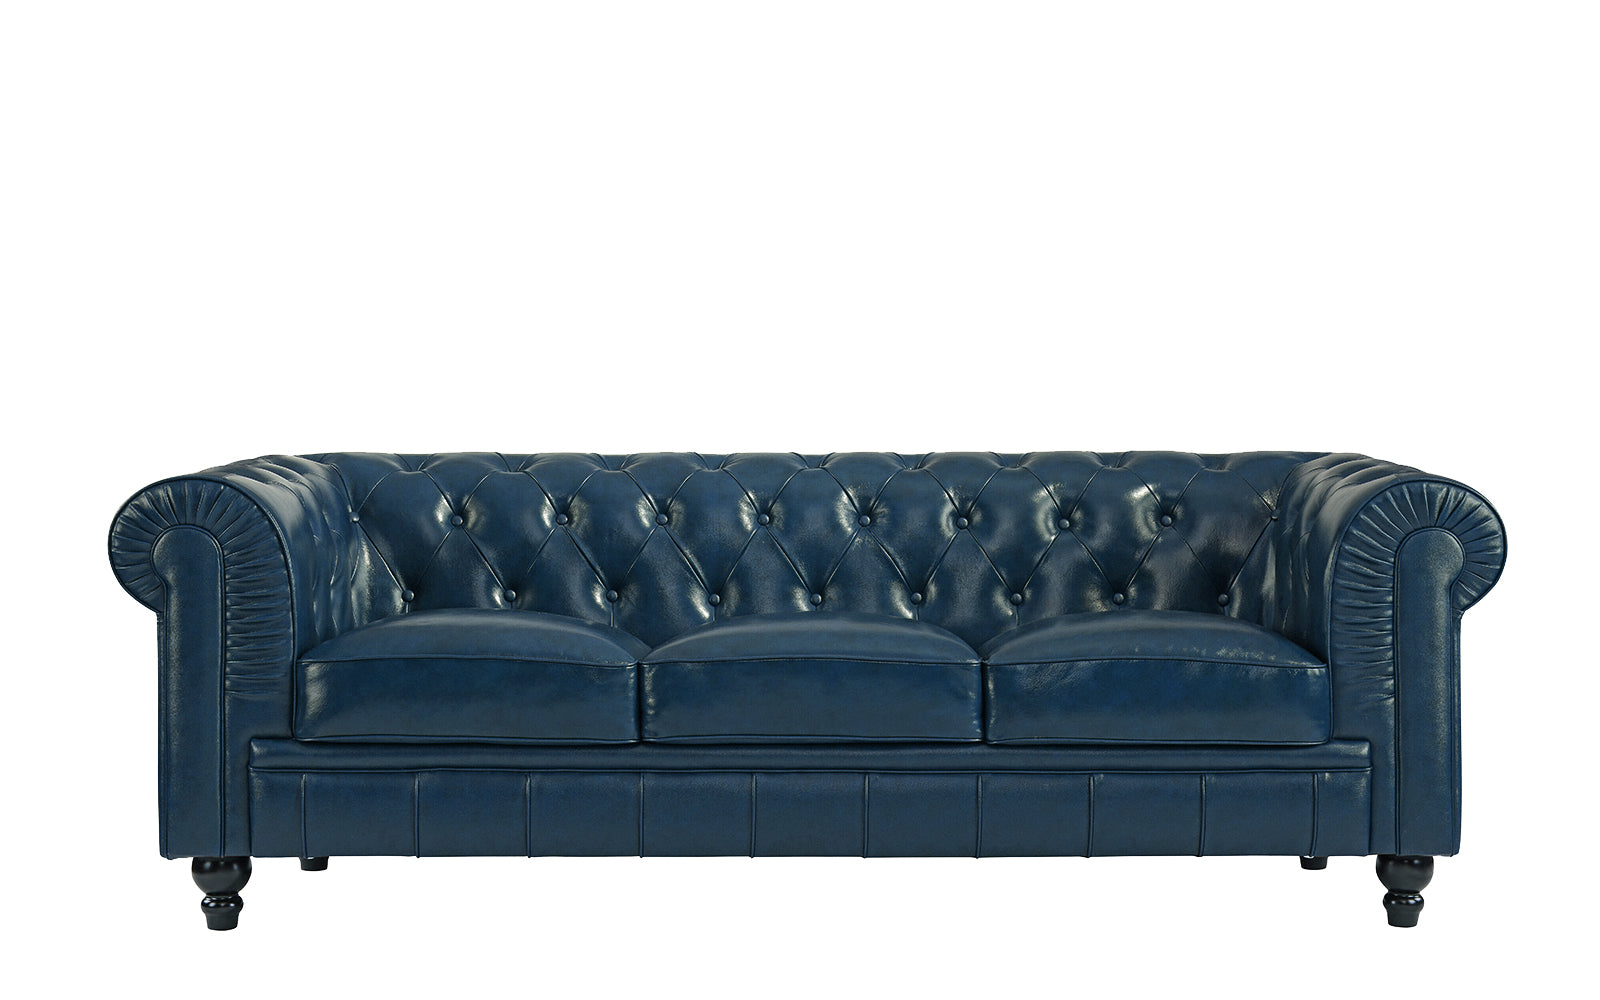 Jude Classic Victorian Leather Match Sofa